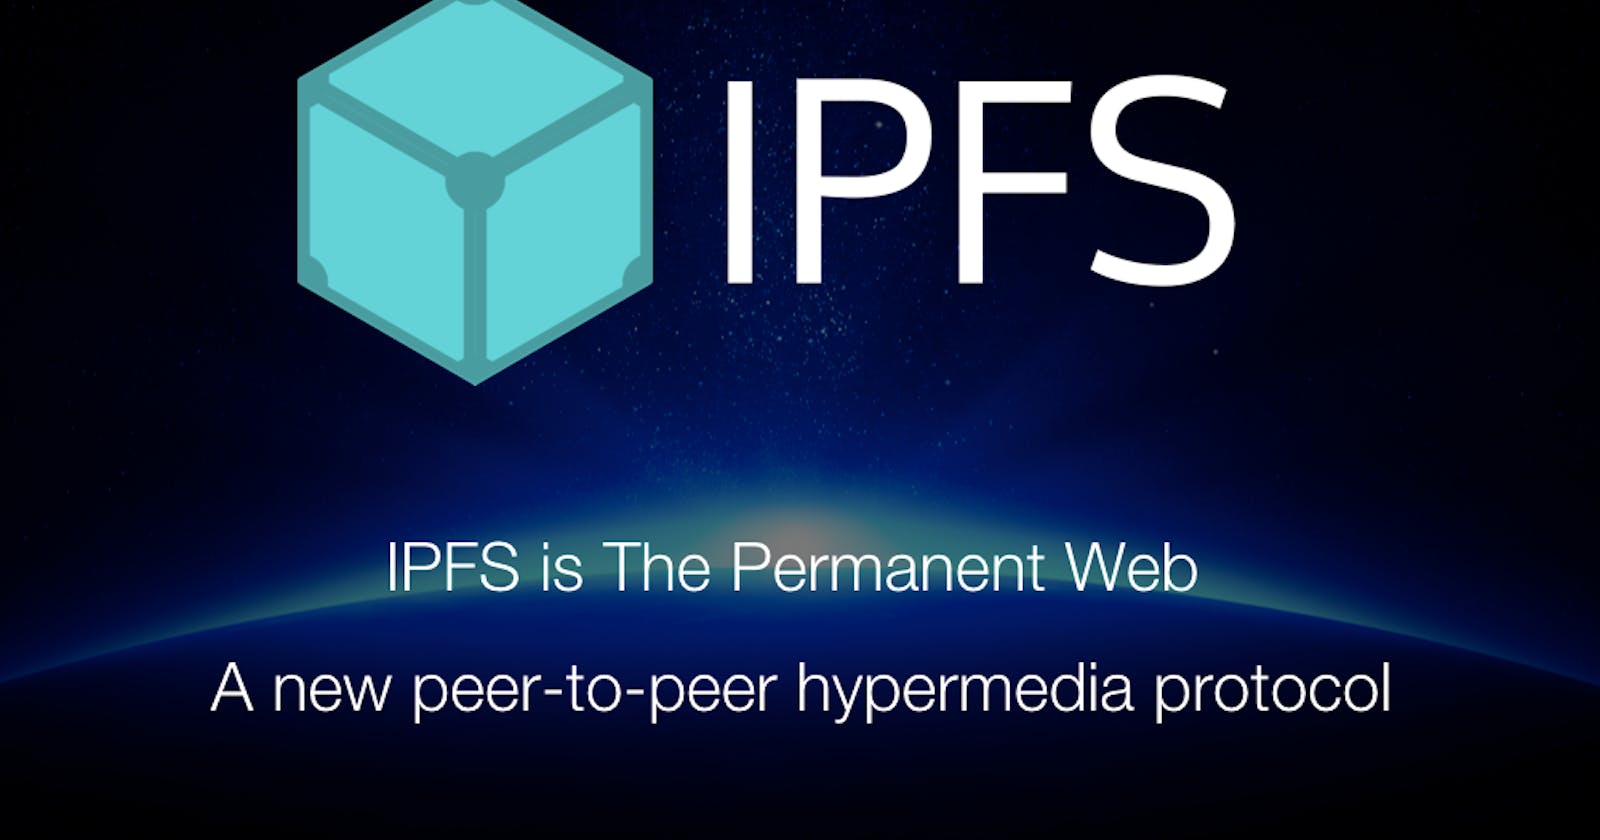 IPFS is a new peer-to-peer hypermedia protocol.